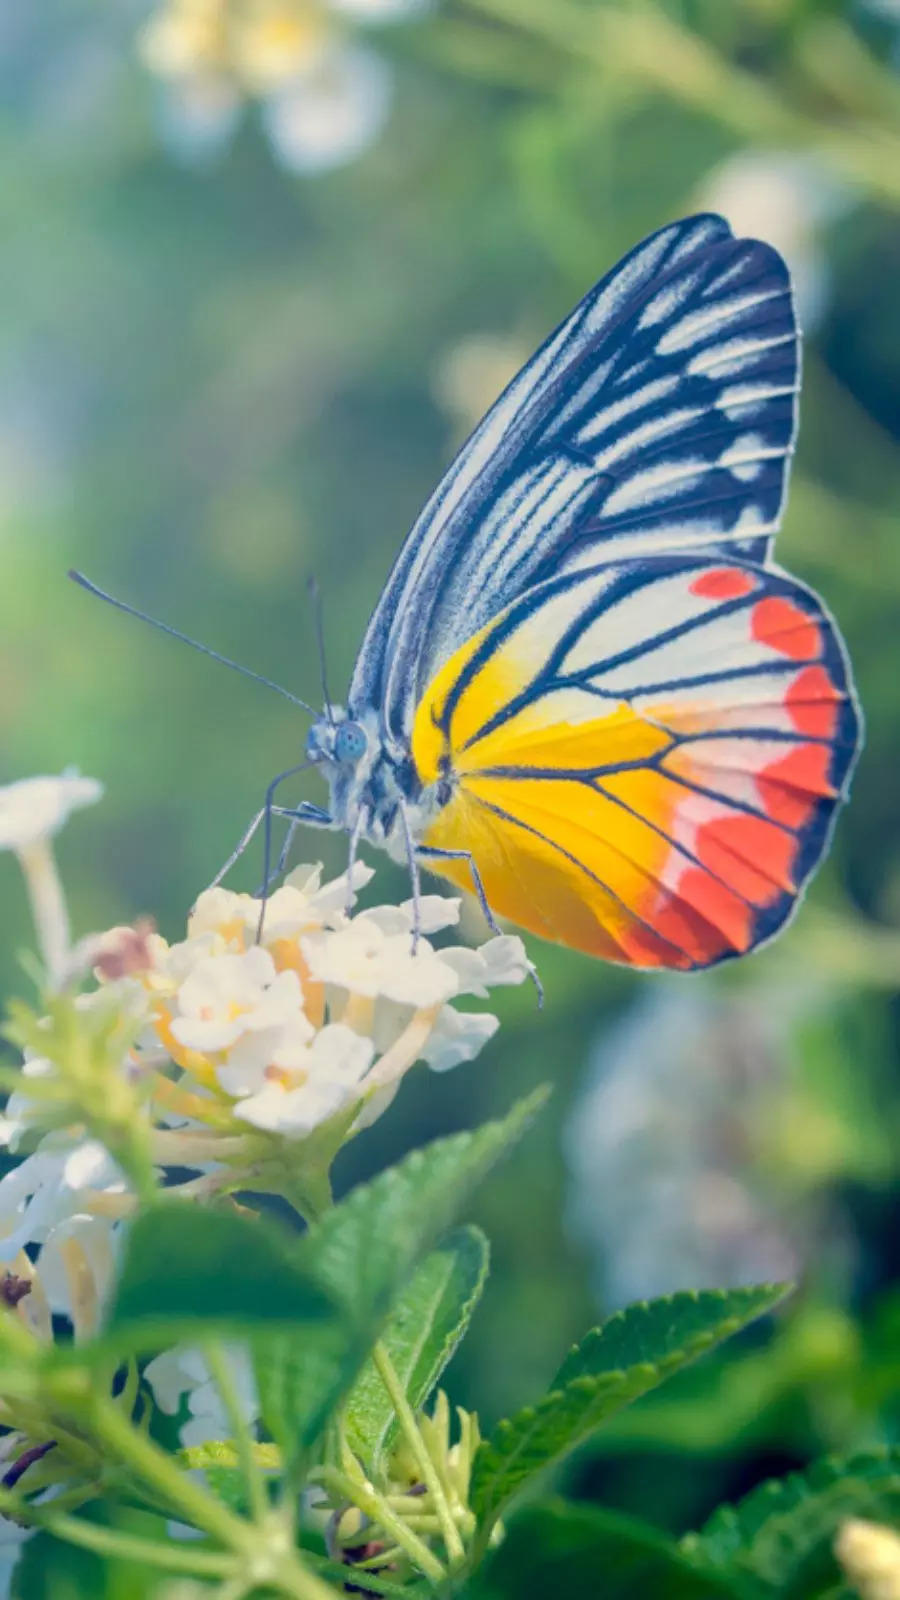 Most beautiful butterflies found around the world